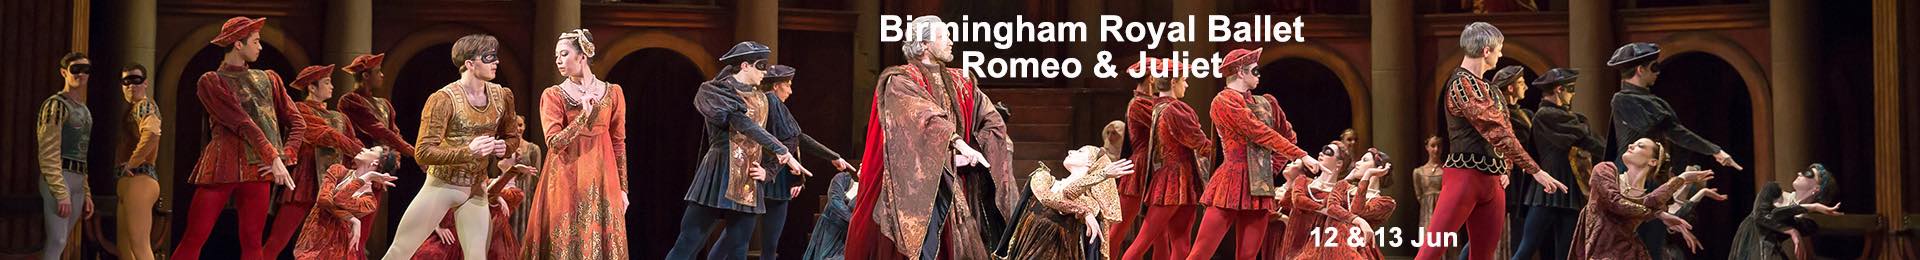 Birmingham Royal Ballet: Romeo & Juliet banner image